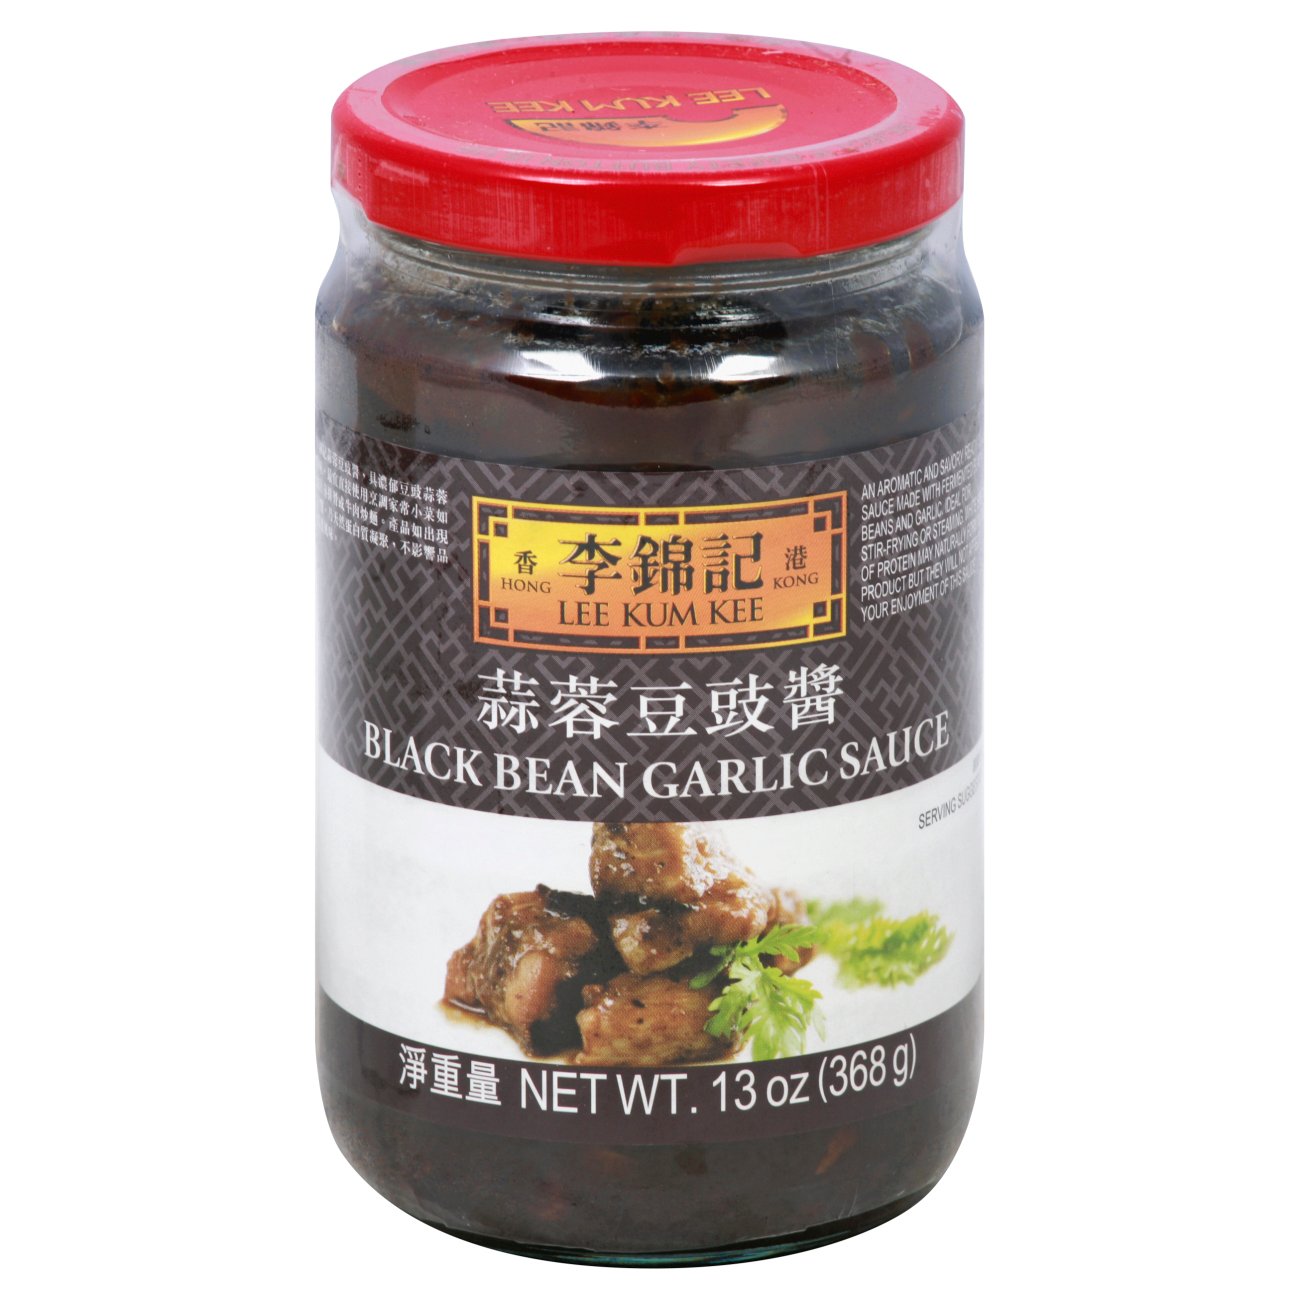 Lee Kum Kee Black Bean Garlic Sauce - Shop Specialty Sauces at H-E-B